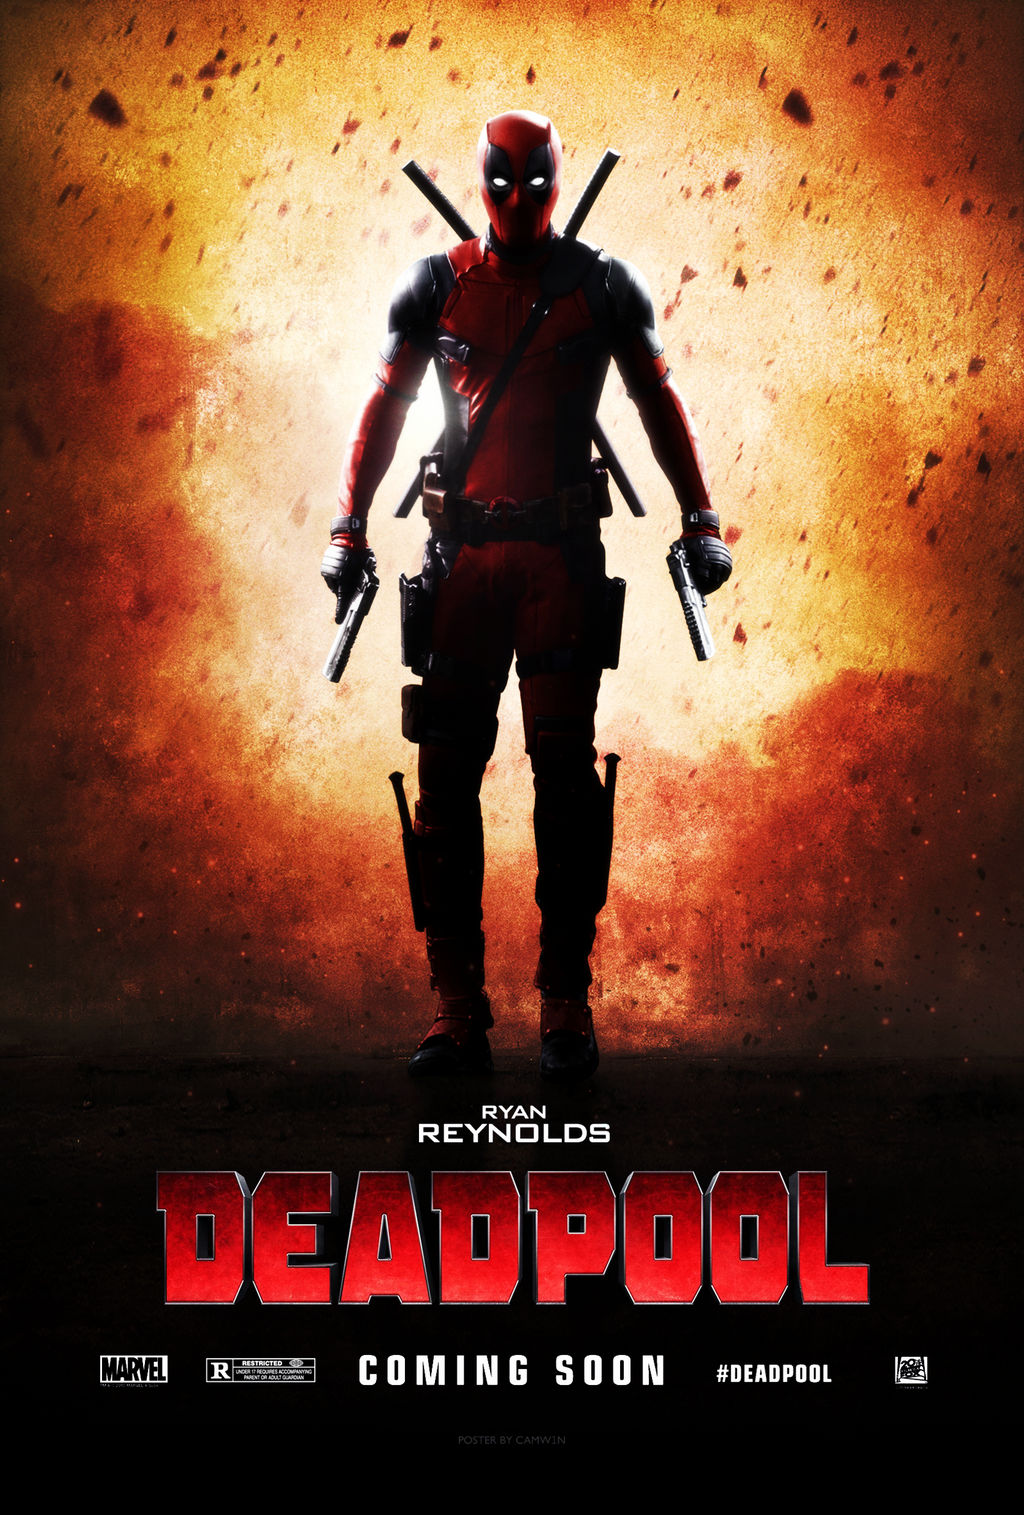 lantano Renacimiento su Deadpool (2016) - Teaser Poster by CAMW1N on DeviantArt